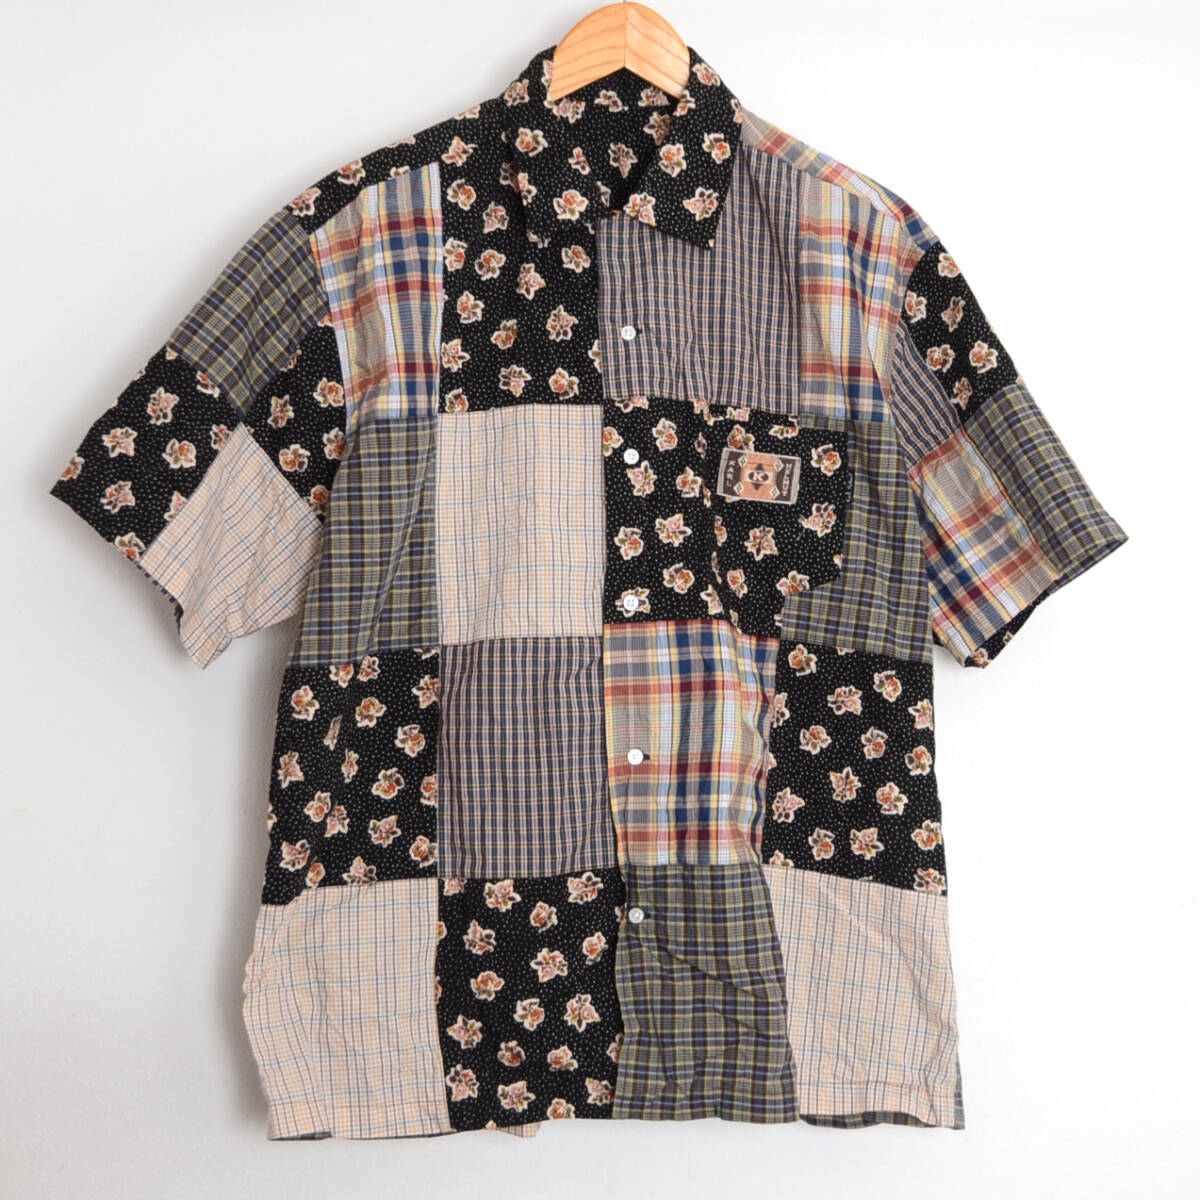 KS307 Karl hell mKARL HELMUT patchwork shirt short sleeves L shoulder width 50 floral print Crazy pattern mail xq